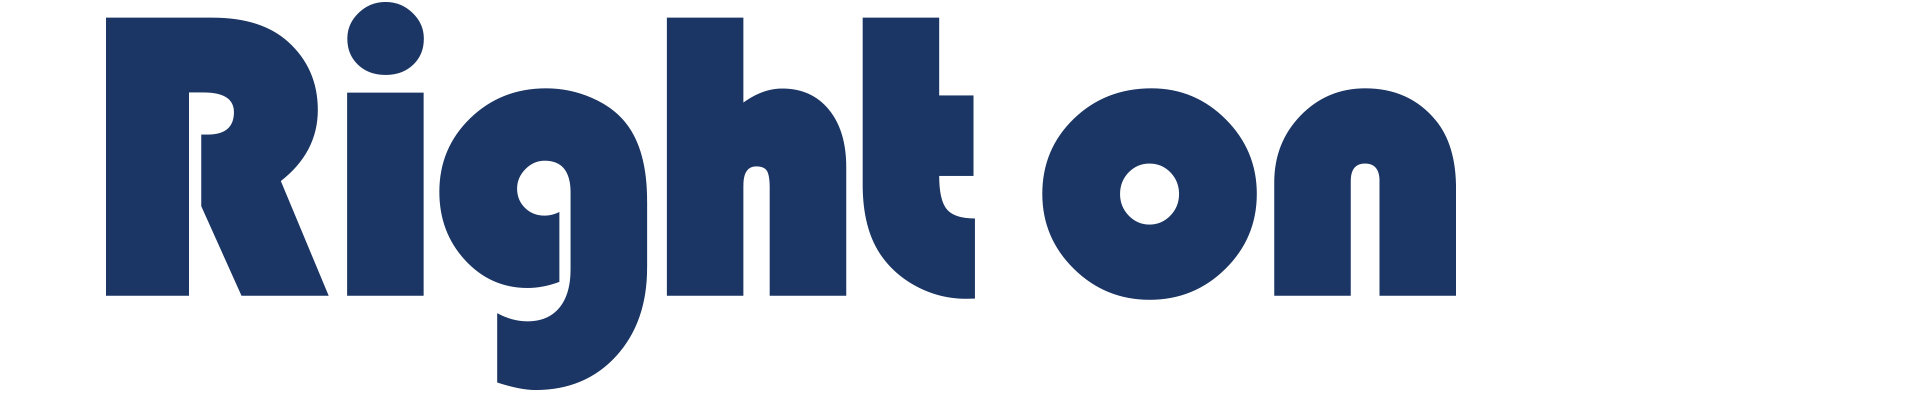 Righton logo blue